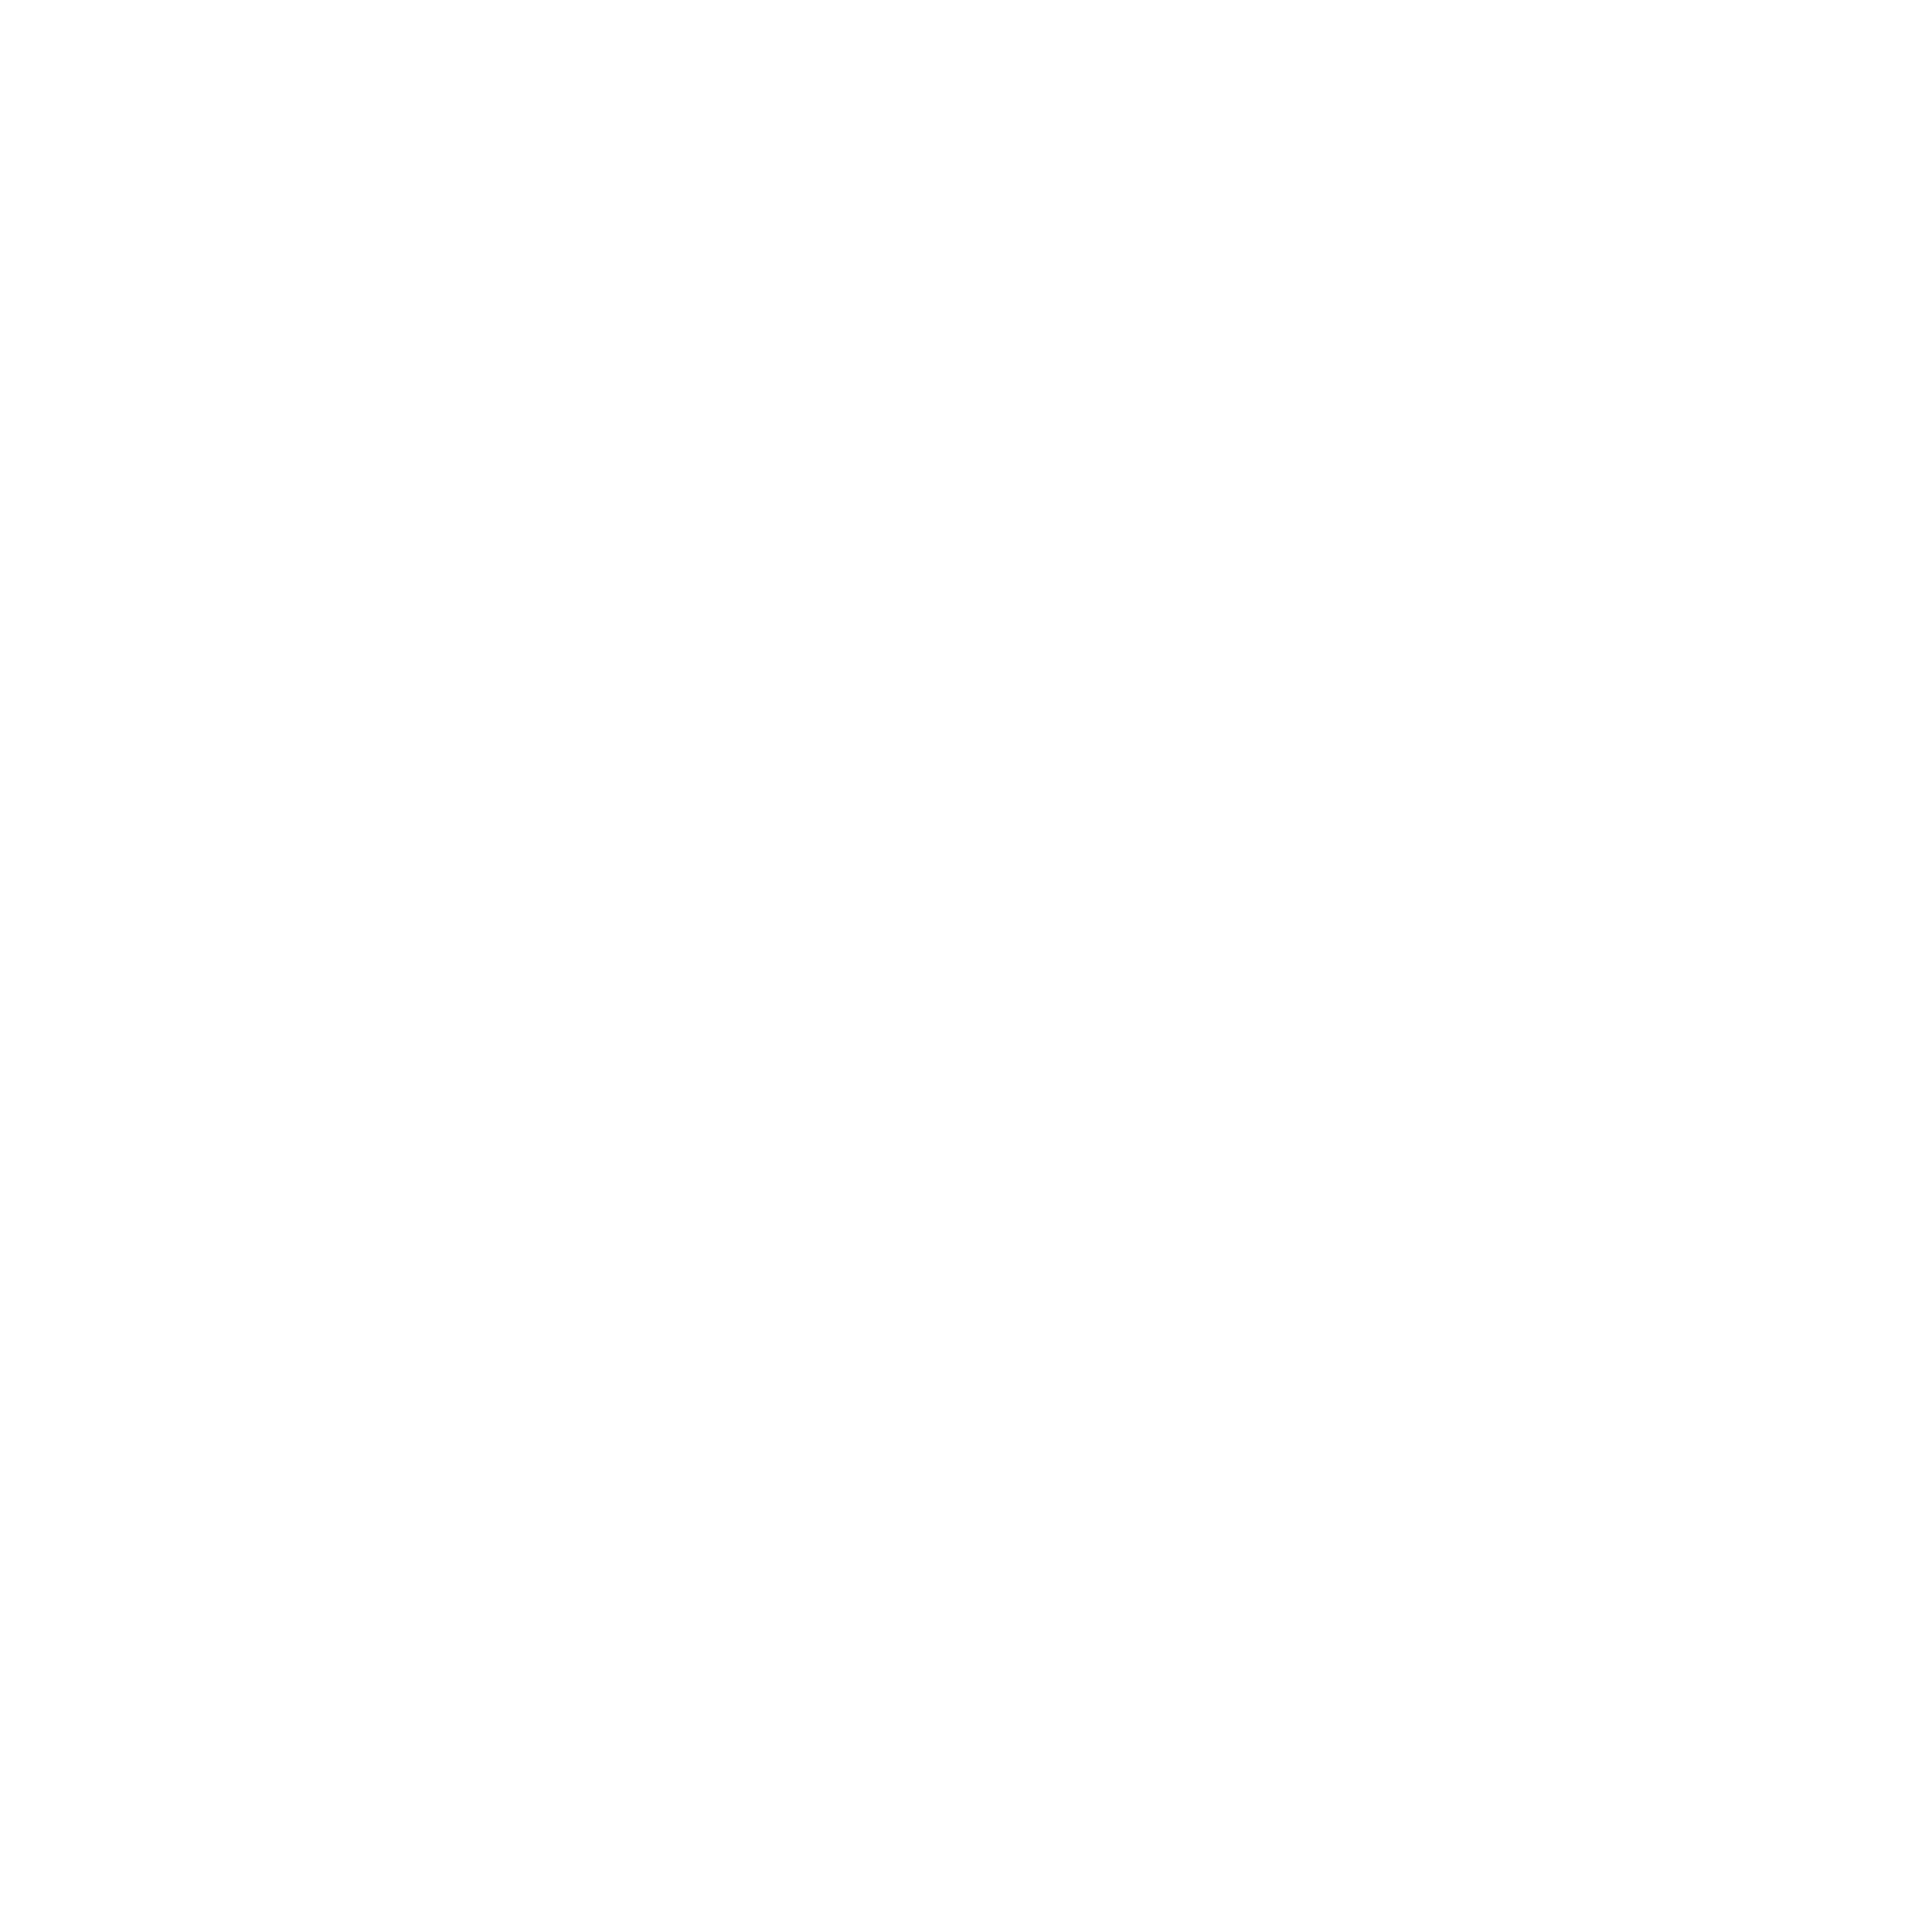 Lothar Koethe Photography